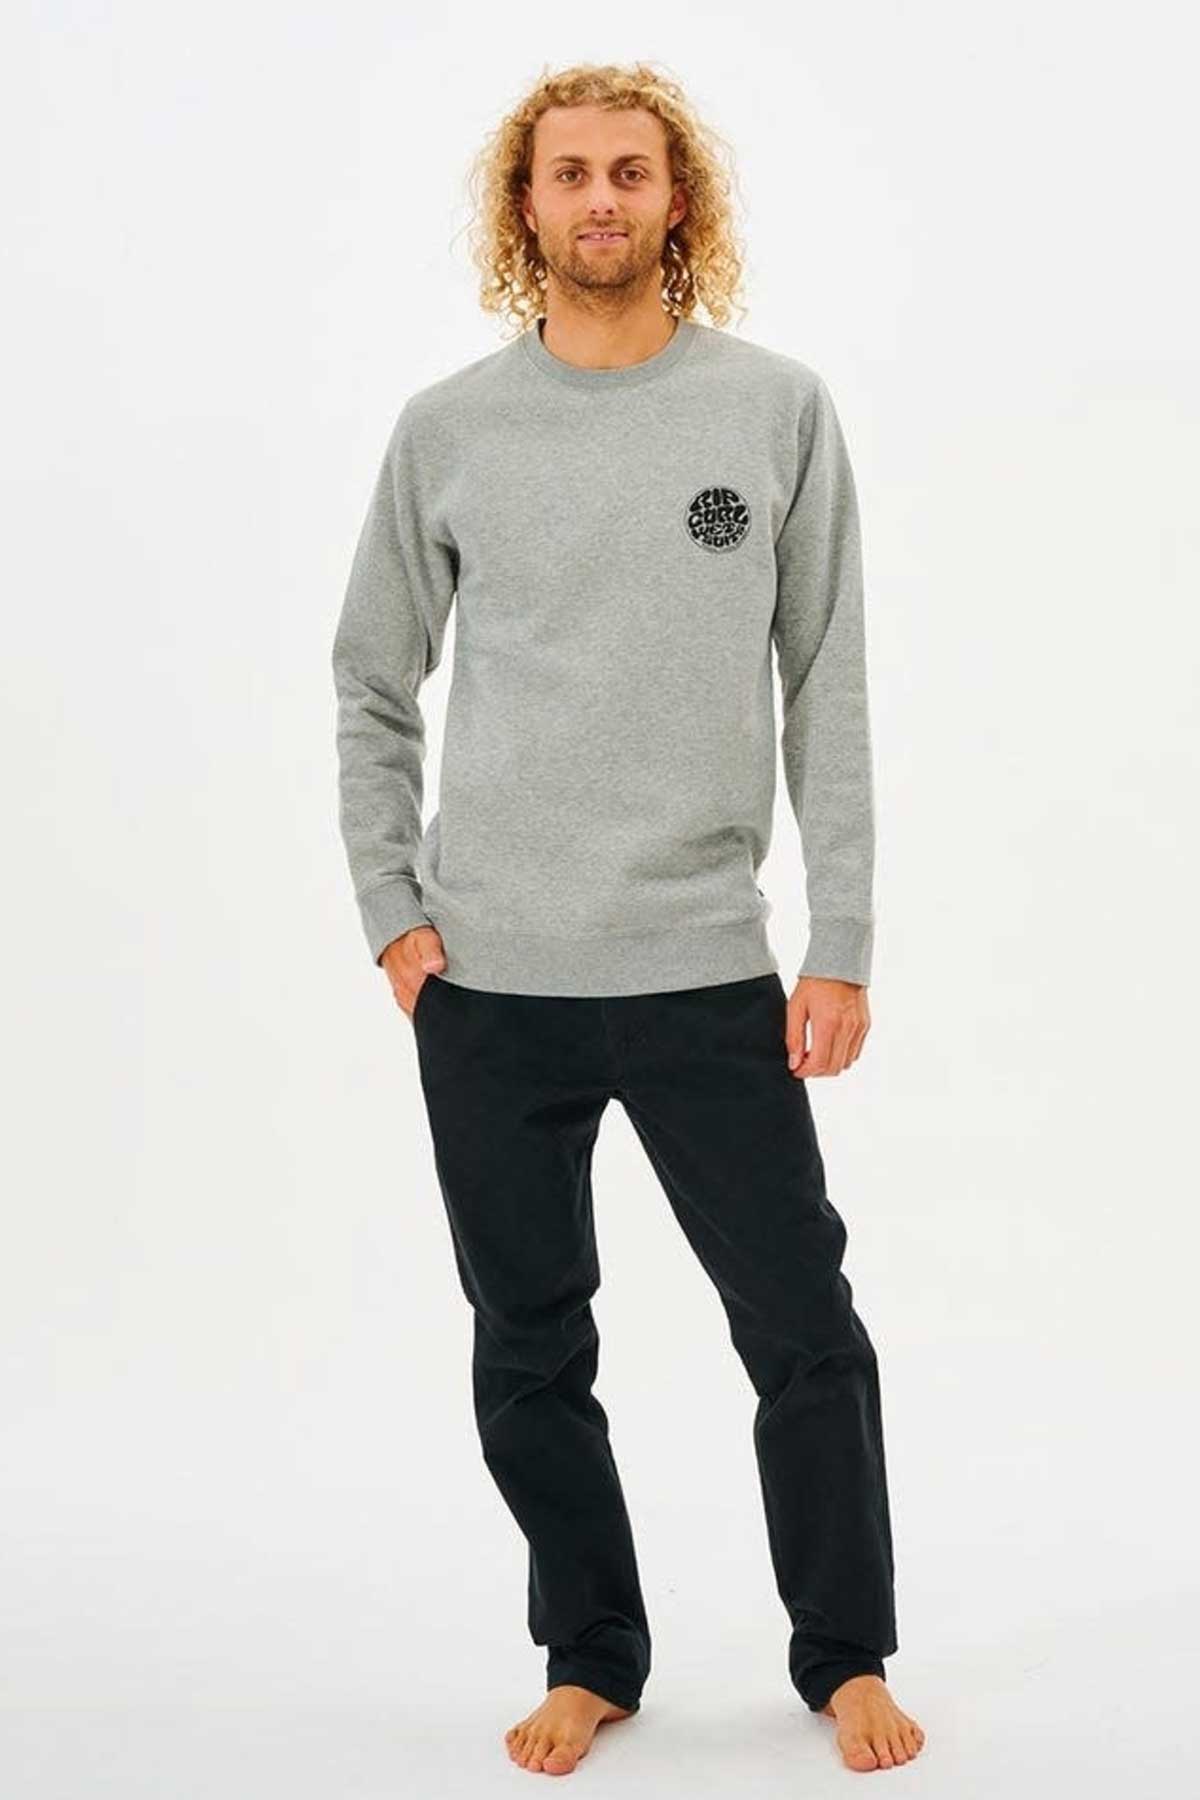 Rip Curl Mens Wetsuit Icon Sweatshirt full model in grey male